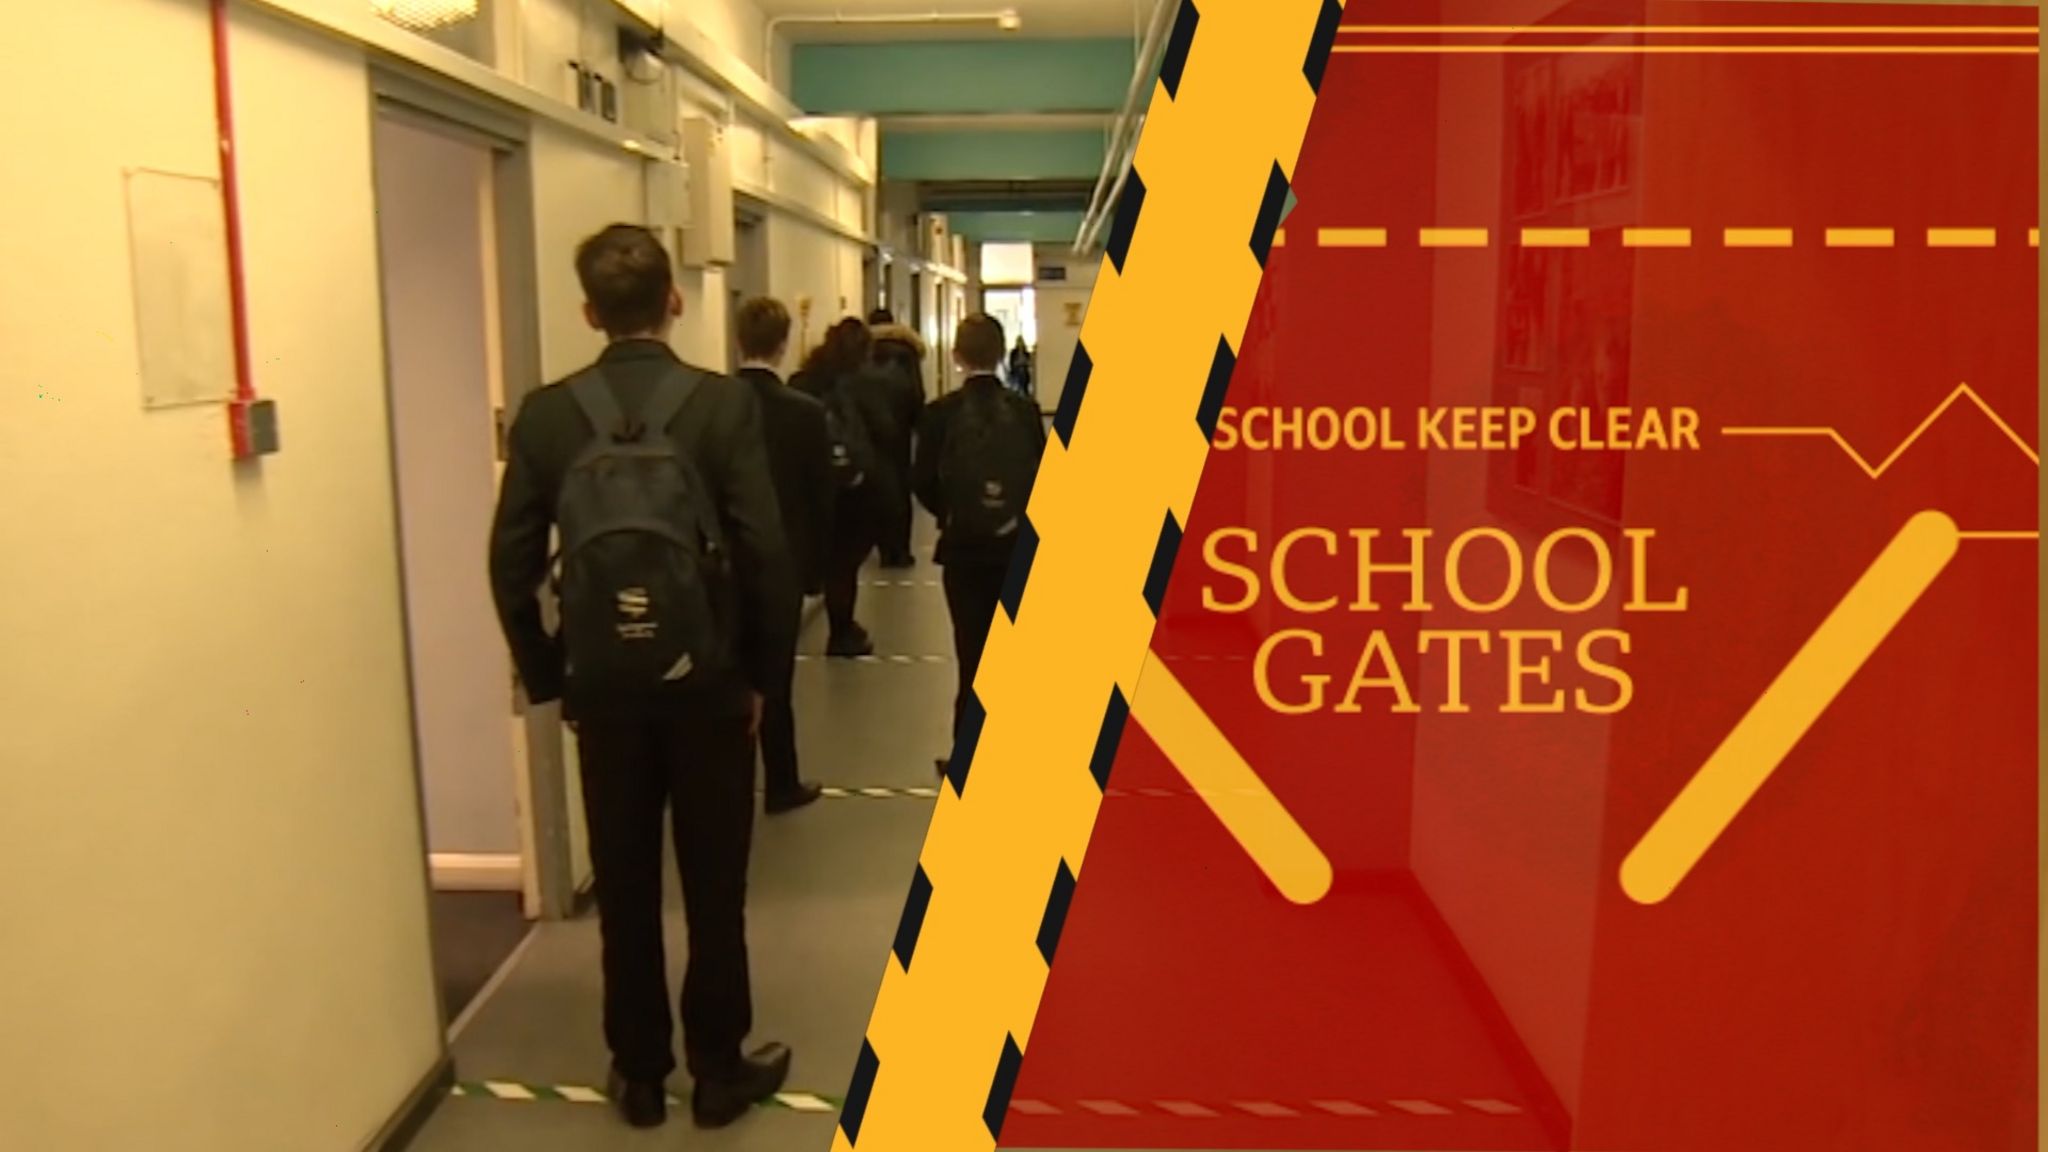 Children queue in a school corridor as part of Covid-19 restrictions